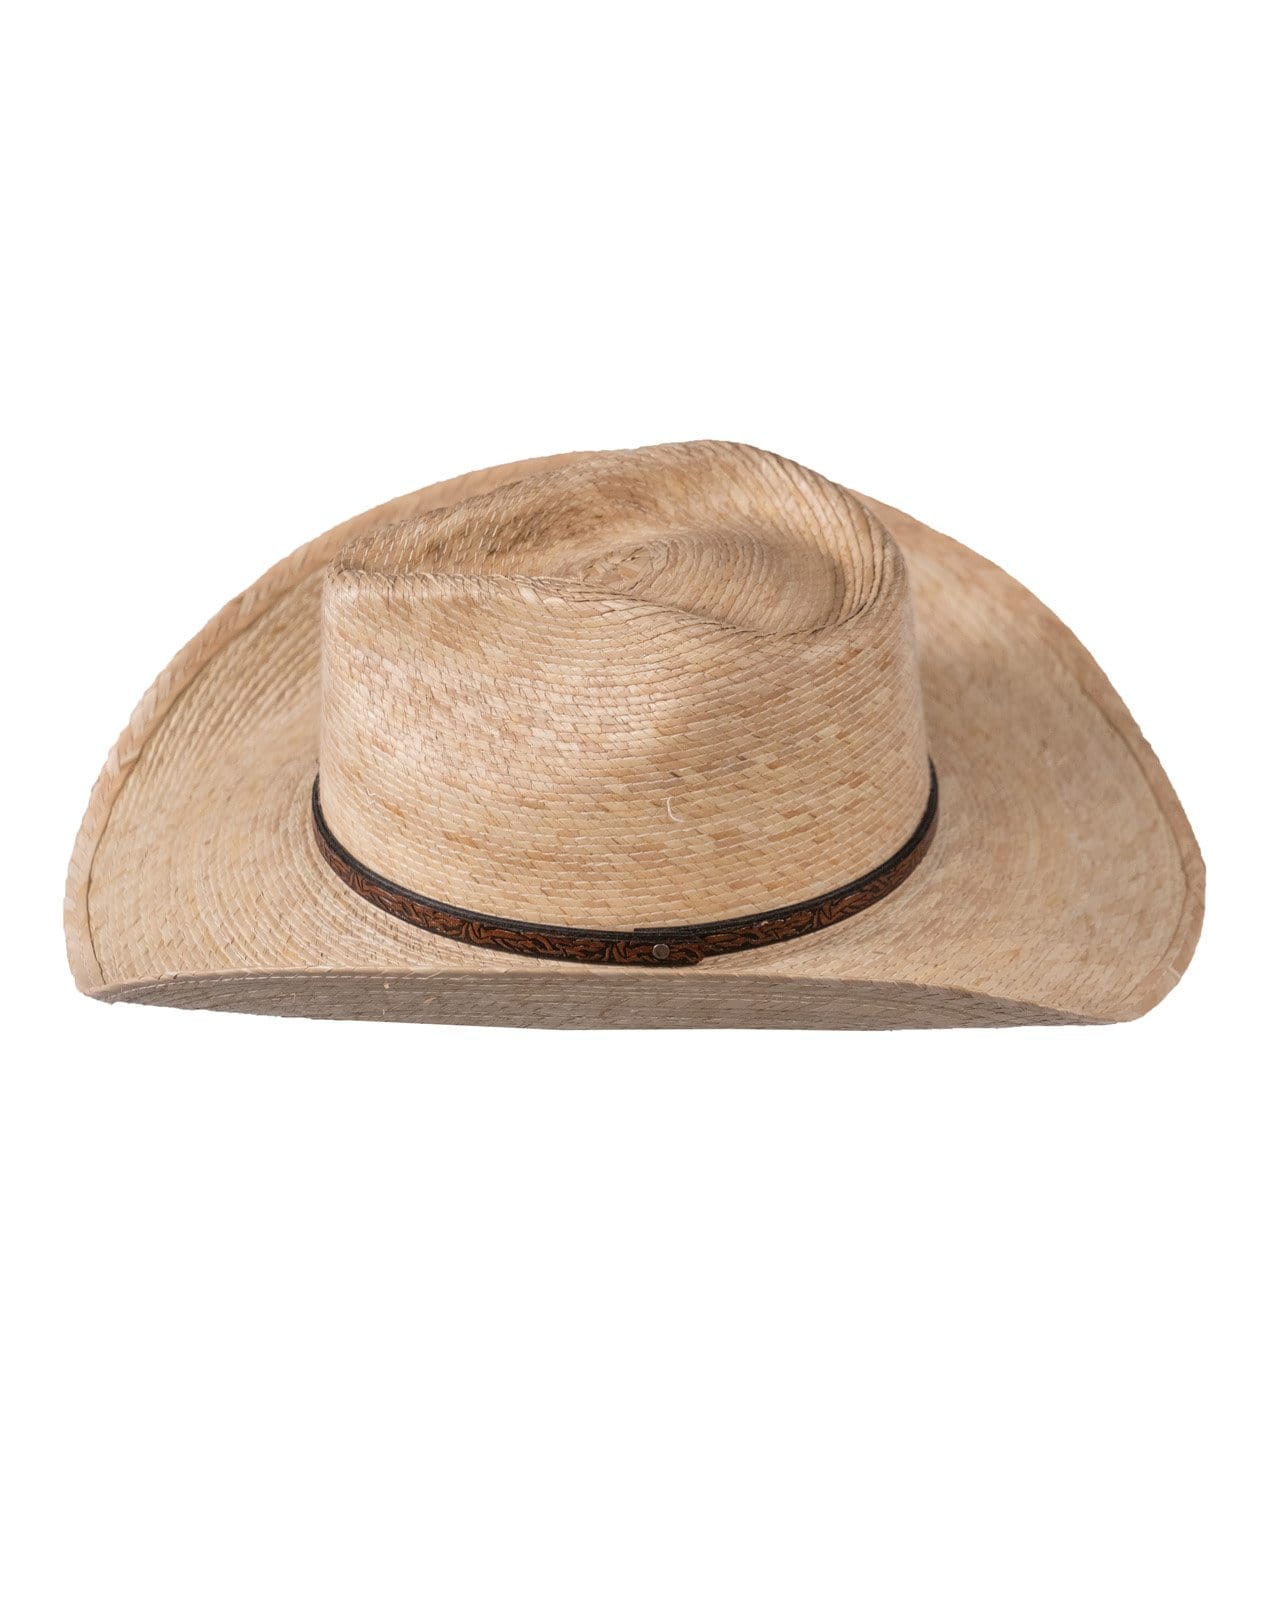 Outback Trading Company Rio Hats